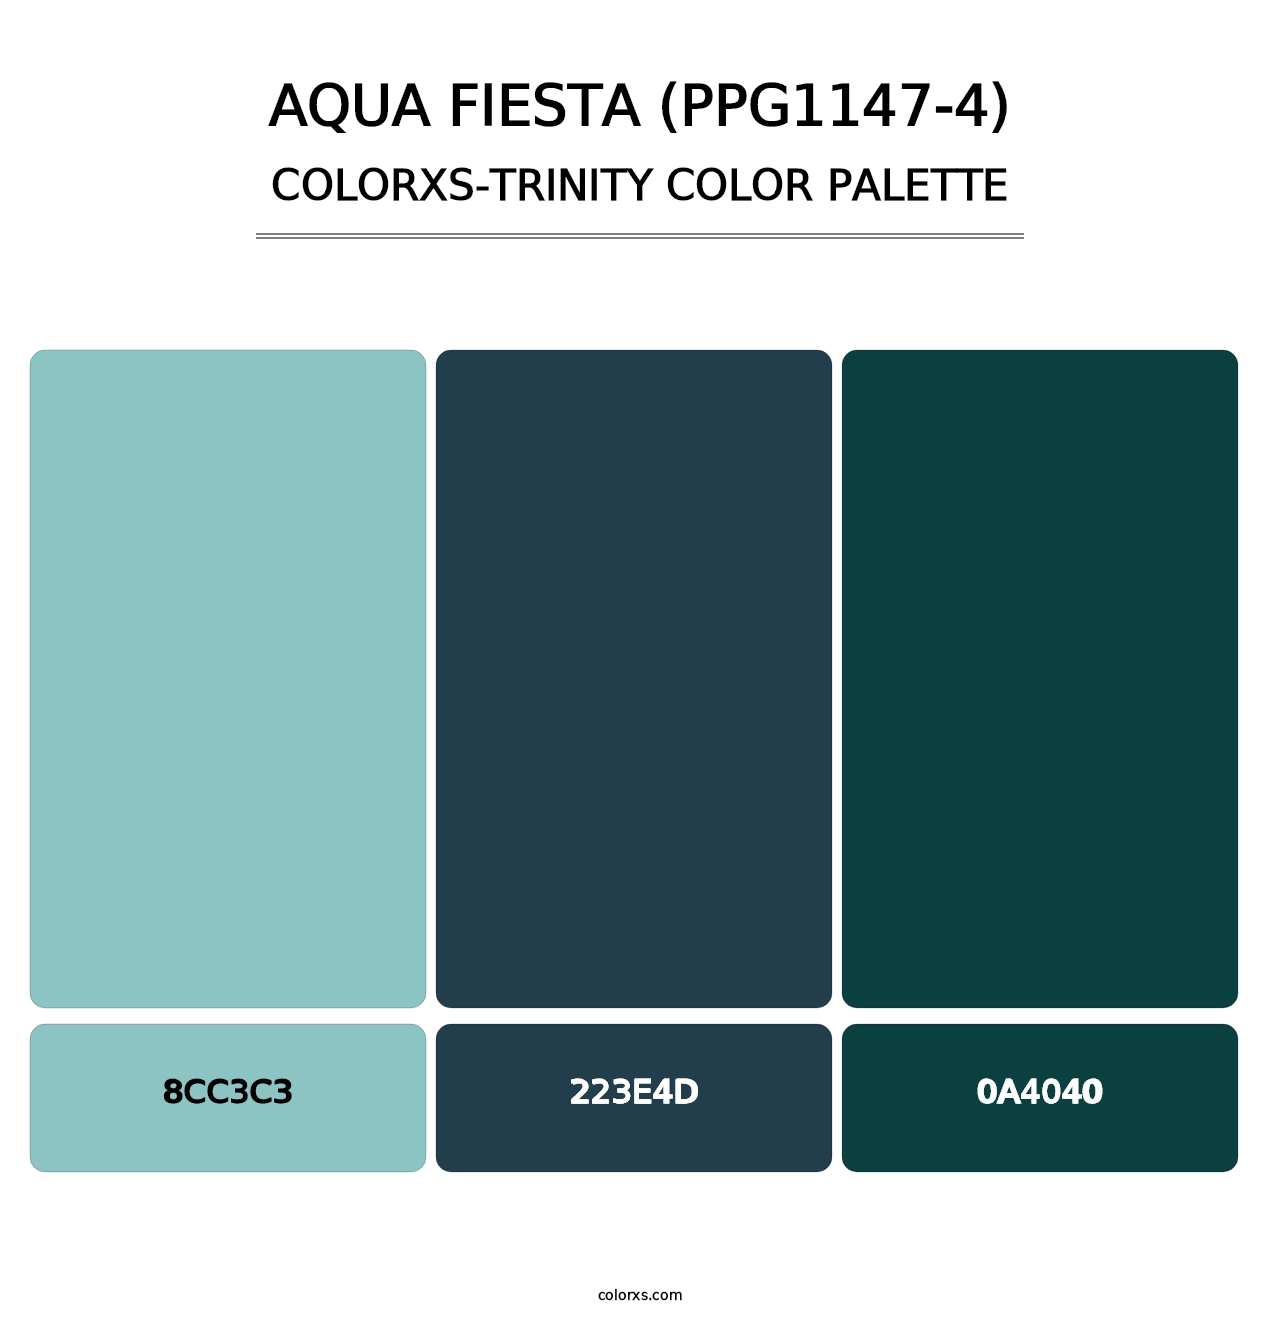 Aqua Fiesta (PPG1147-4) - Colorxs Trinity Palette